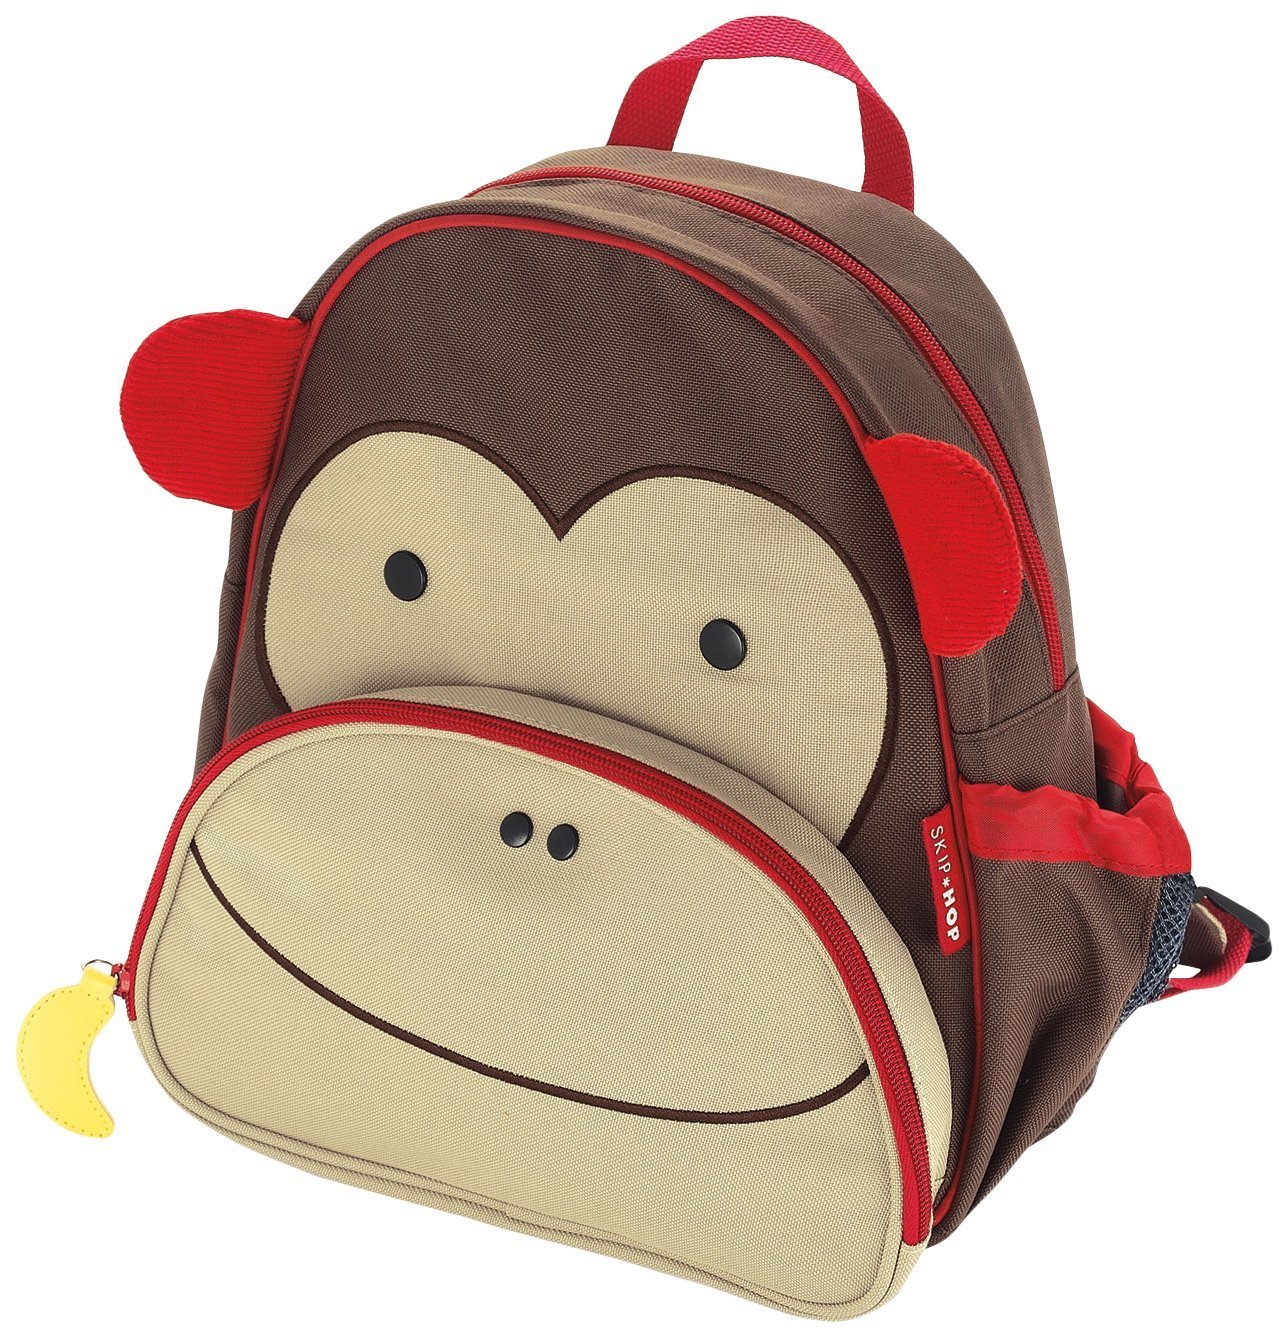 Skip Hop Zoo kids insulated backpack for $10